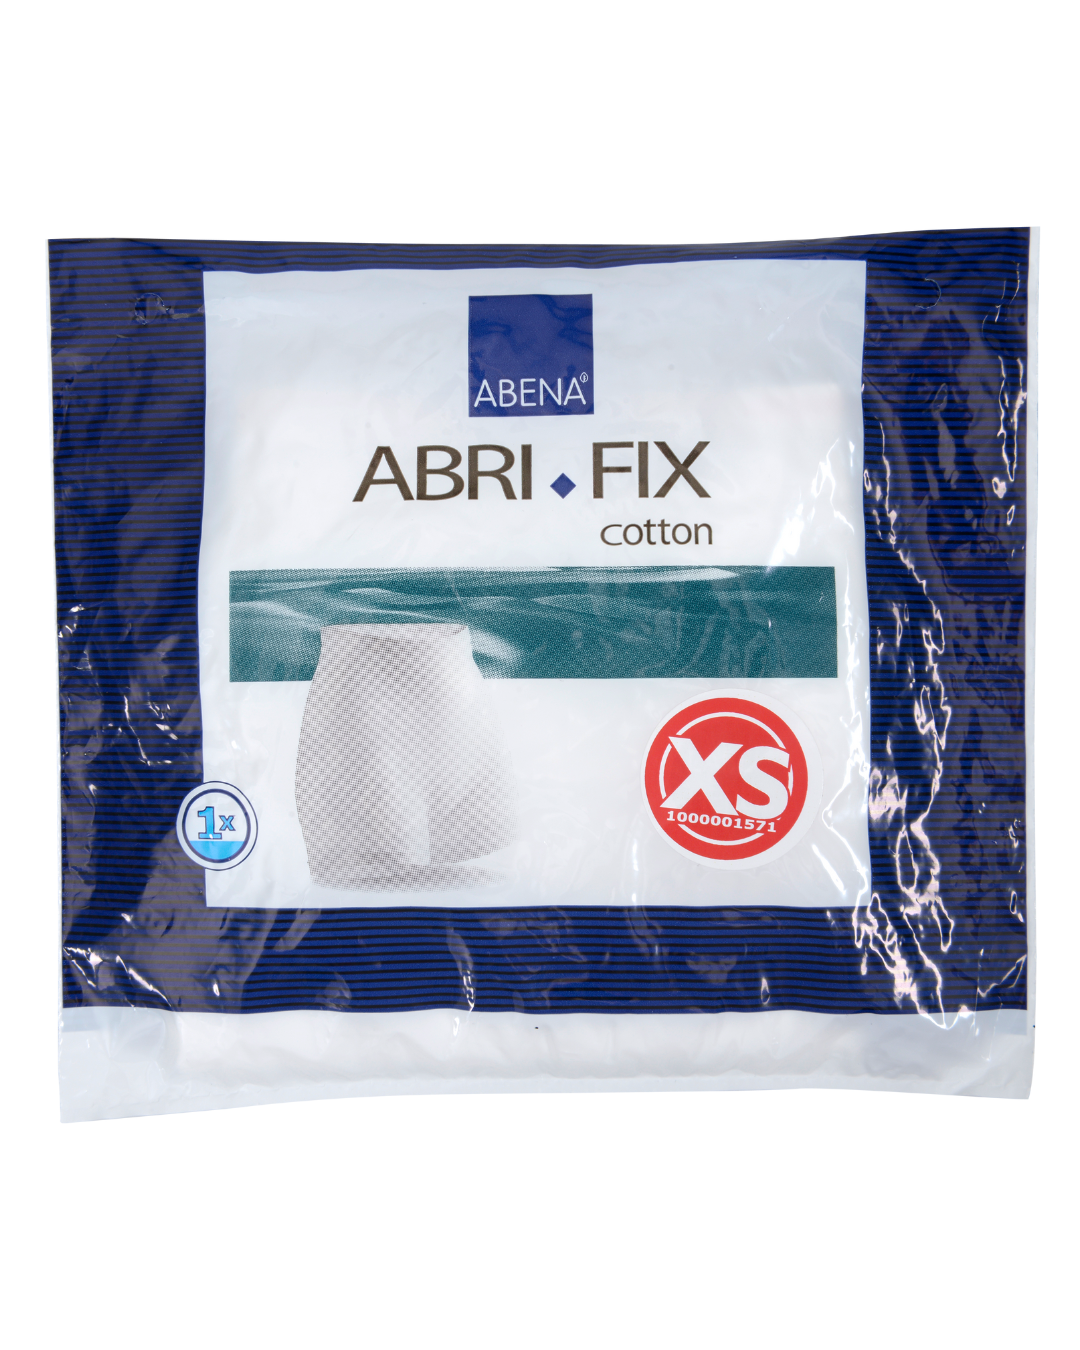 Abri-Fix Cotton with Legs - X-small